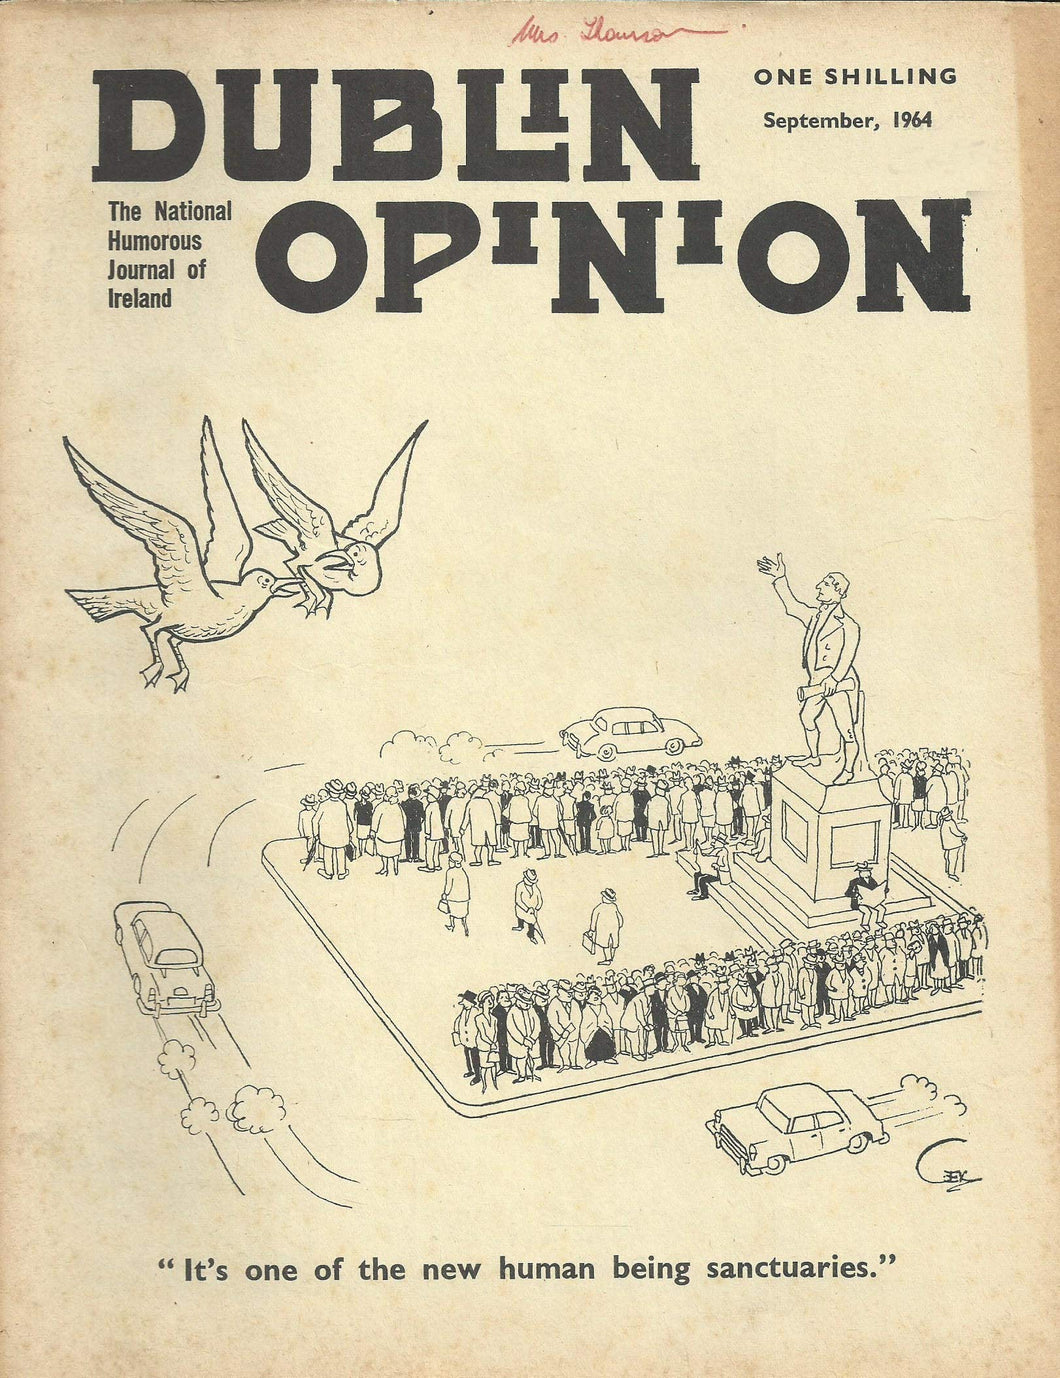 Dublin Opinion - September, 1964 - The National Humorous Journal of Ireland